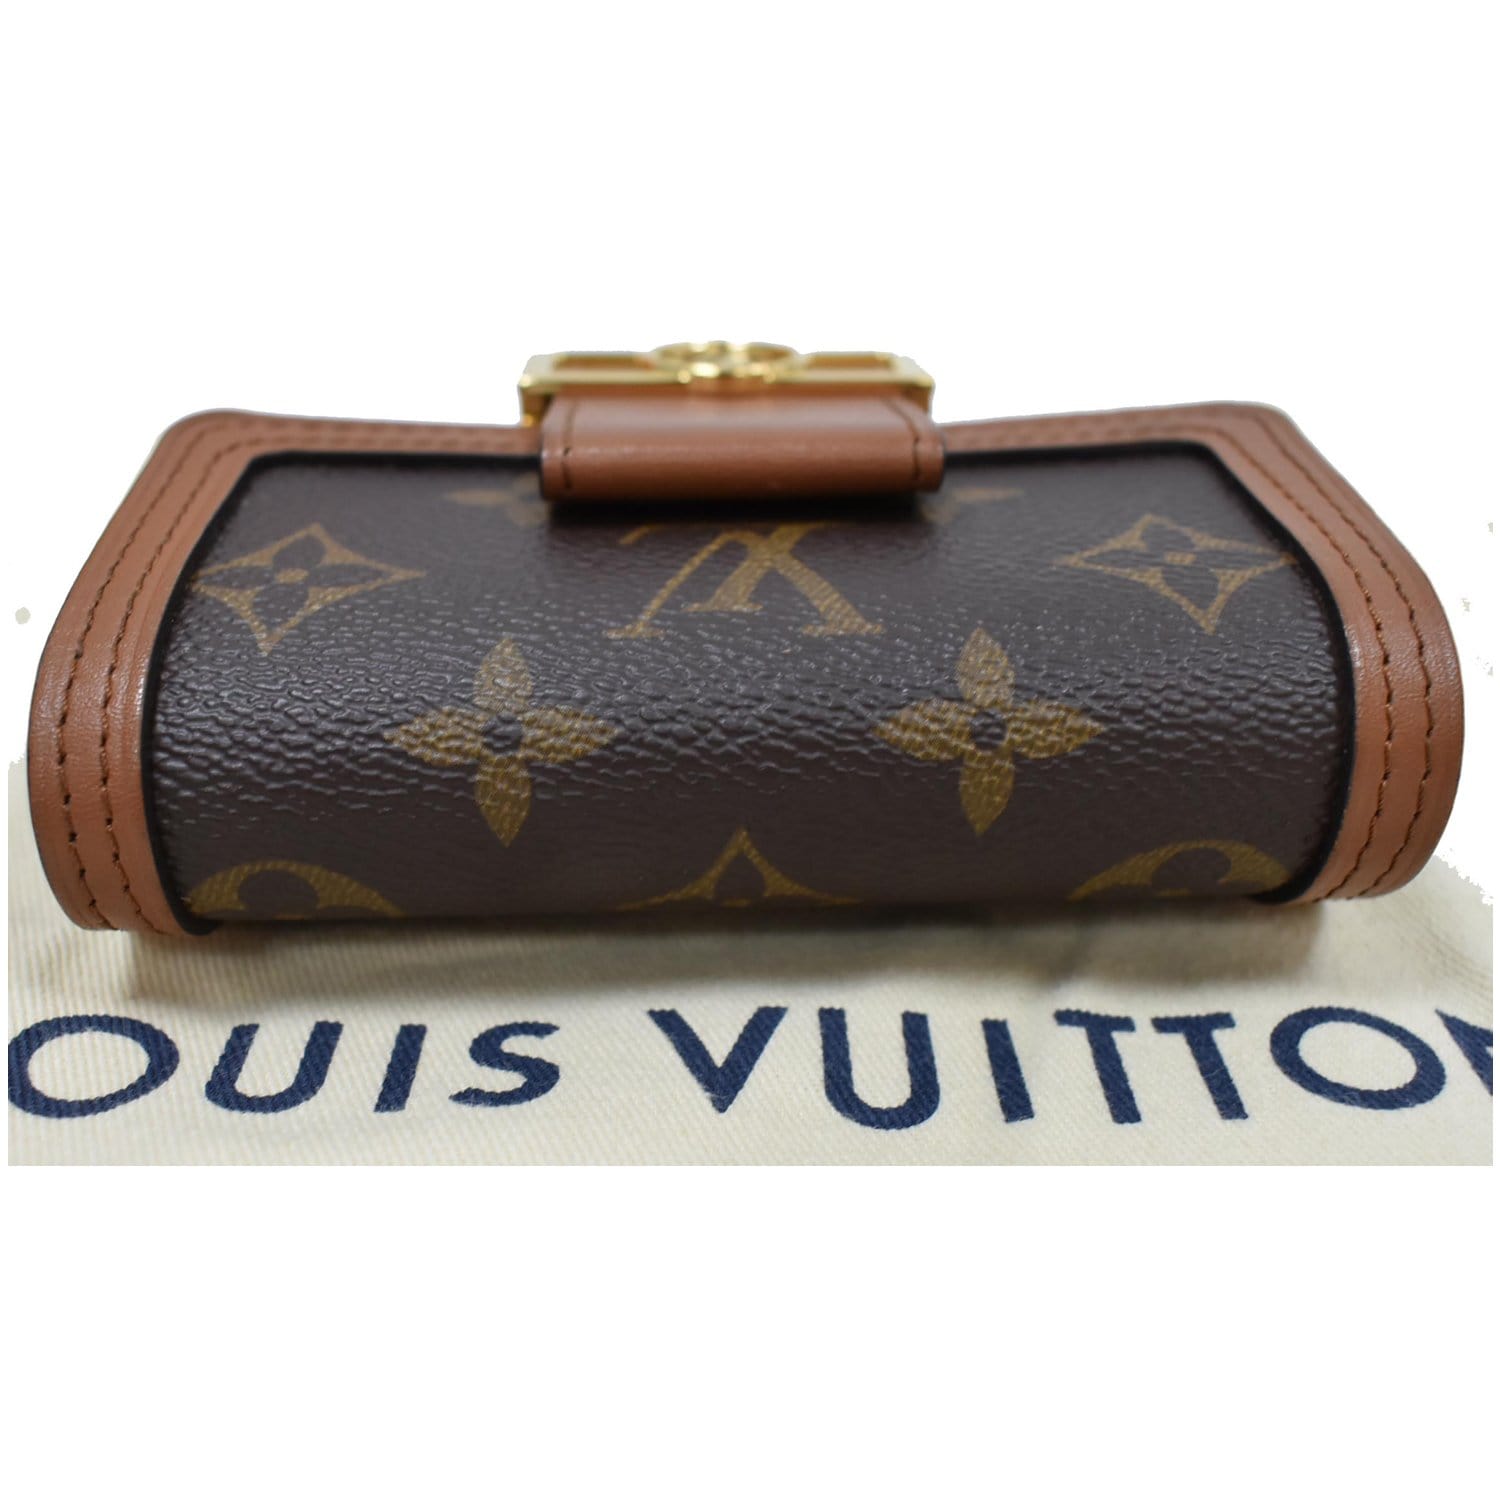 Louis Vuitton Dauphine Compact Wallet Reverse Monogram Canvas Brown 80911528